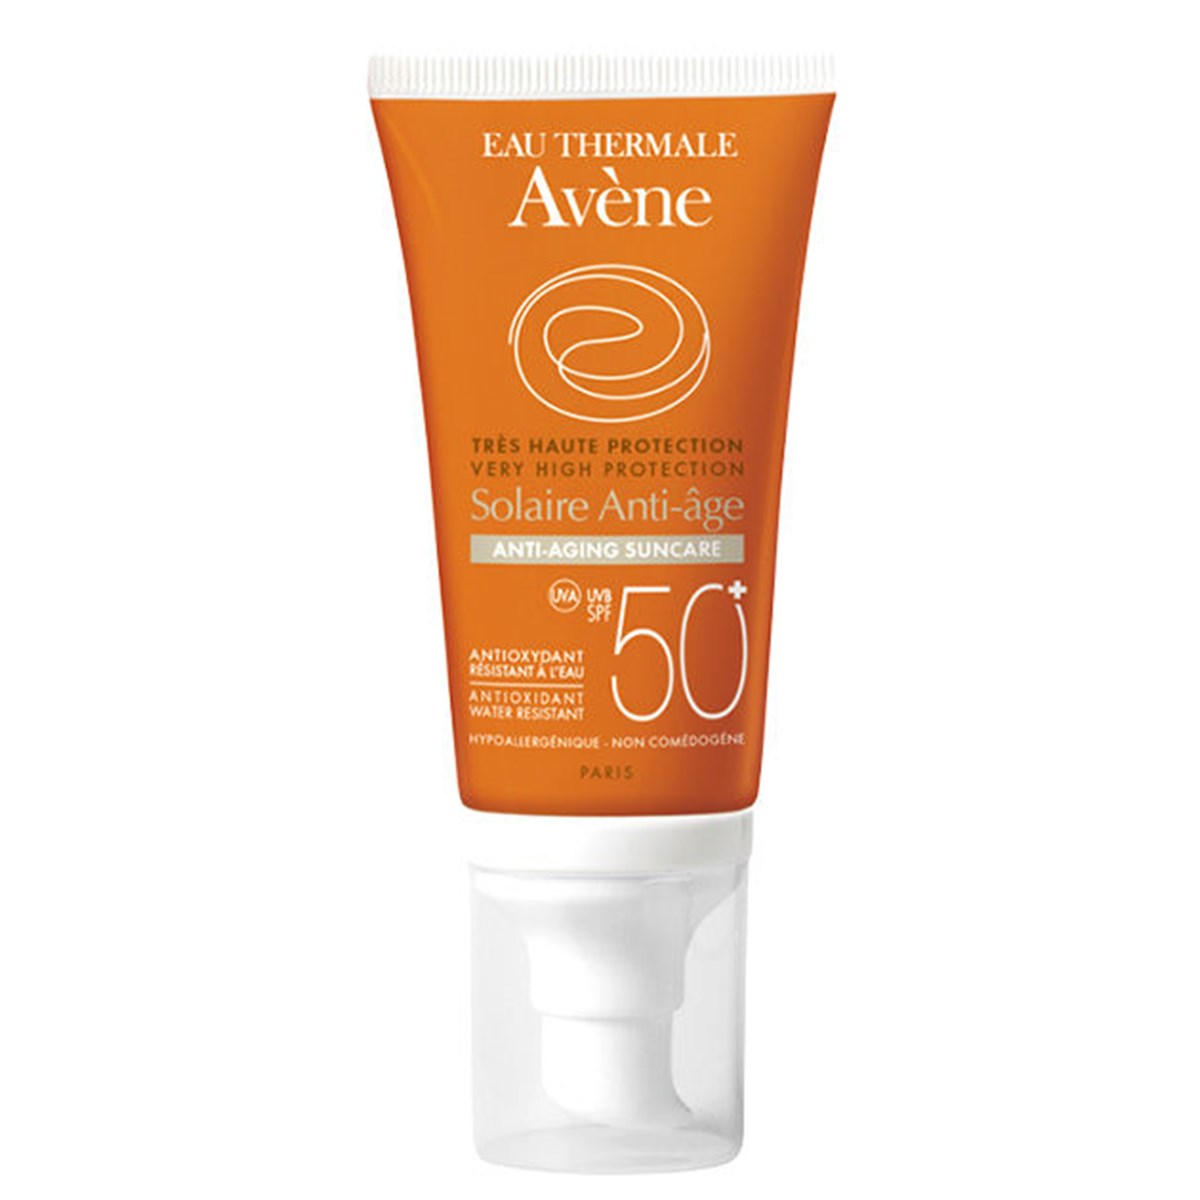 Avene Solaire SPF 50 Anti-Aging Suncare Cream 50 ml-LeylekKapida.com